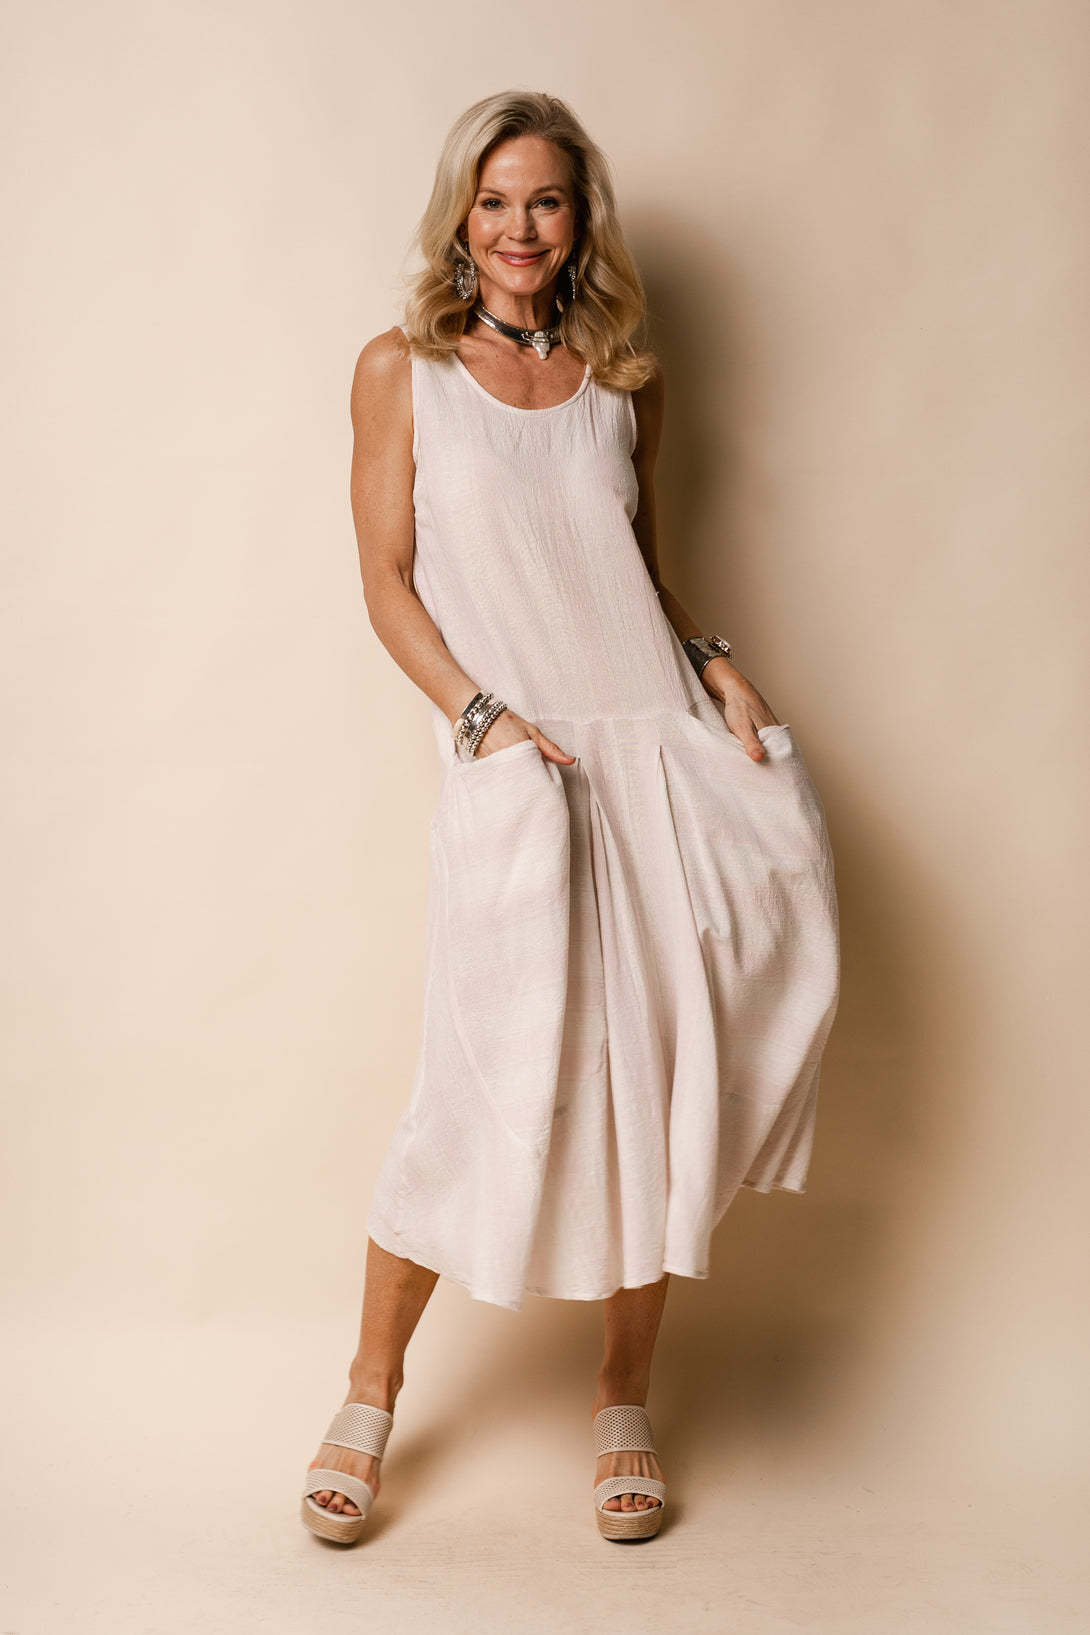 Tiara Cotton Dress in Blush - Imagine Fashion